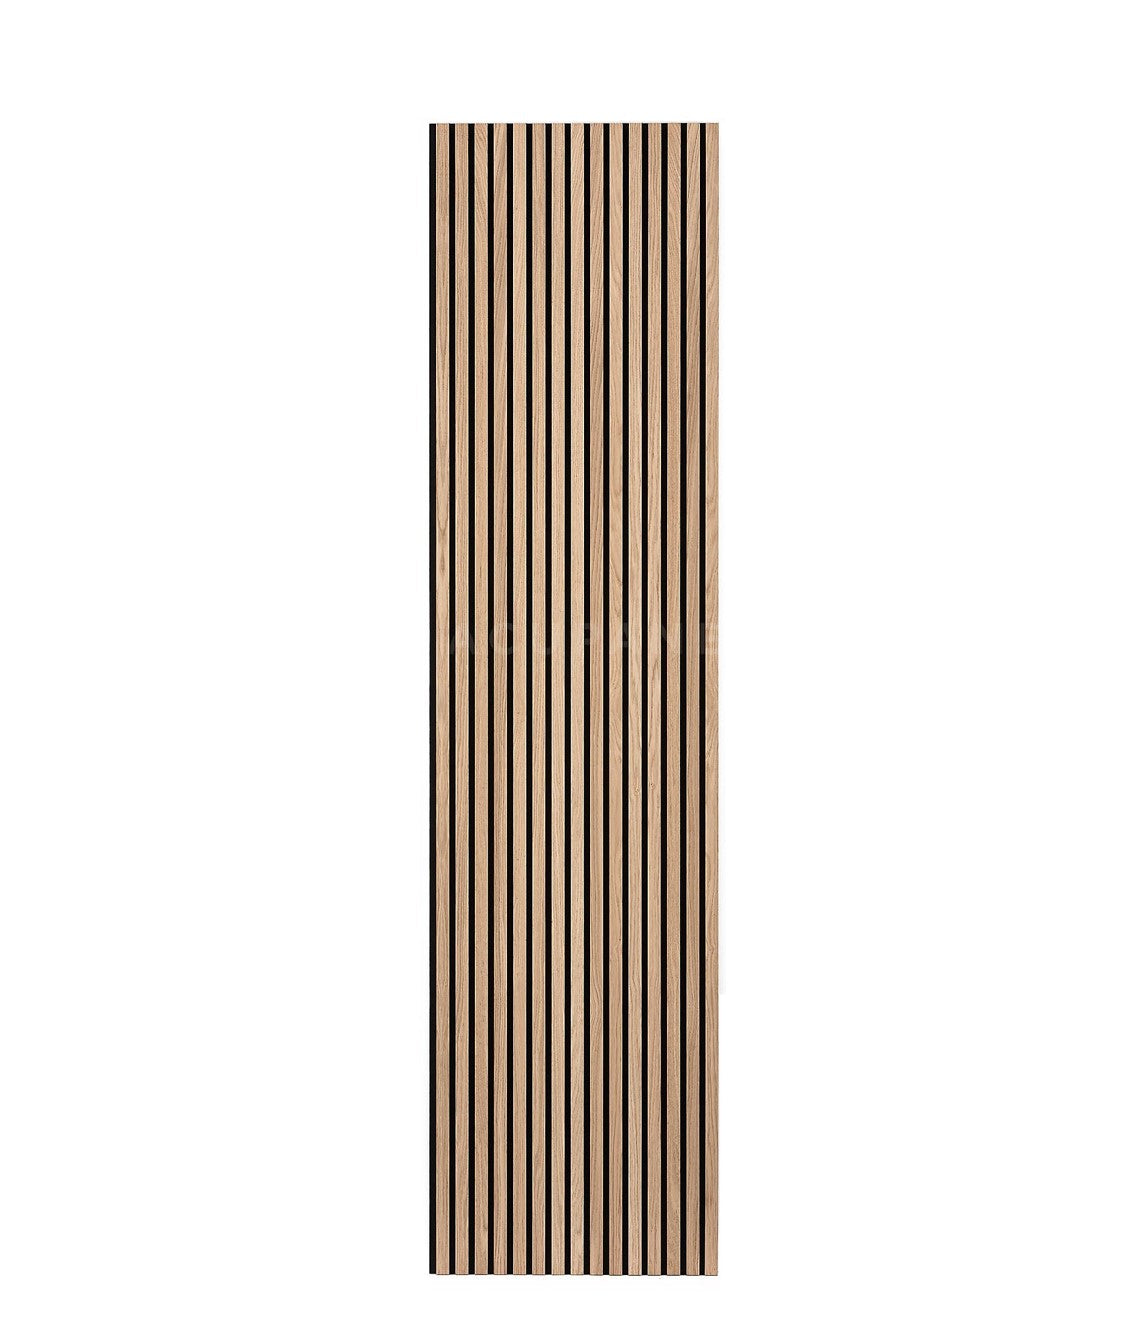 Acupanel Contemporary Oak Acoustic Wood Slat Wall Panel 120cm x 60cm (R11)